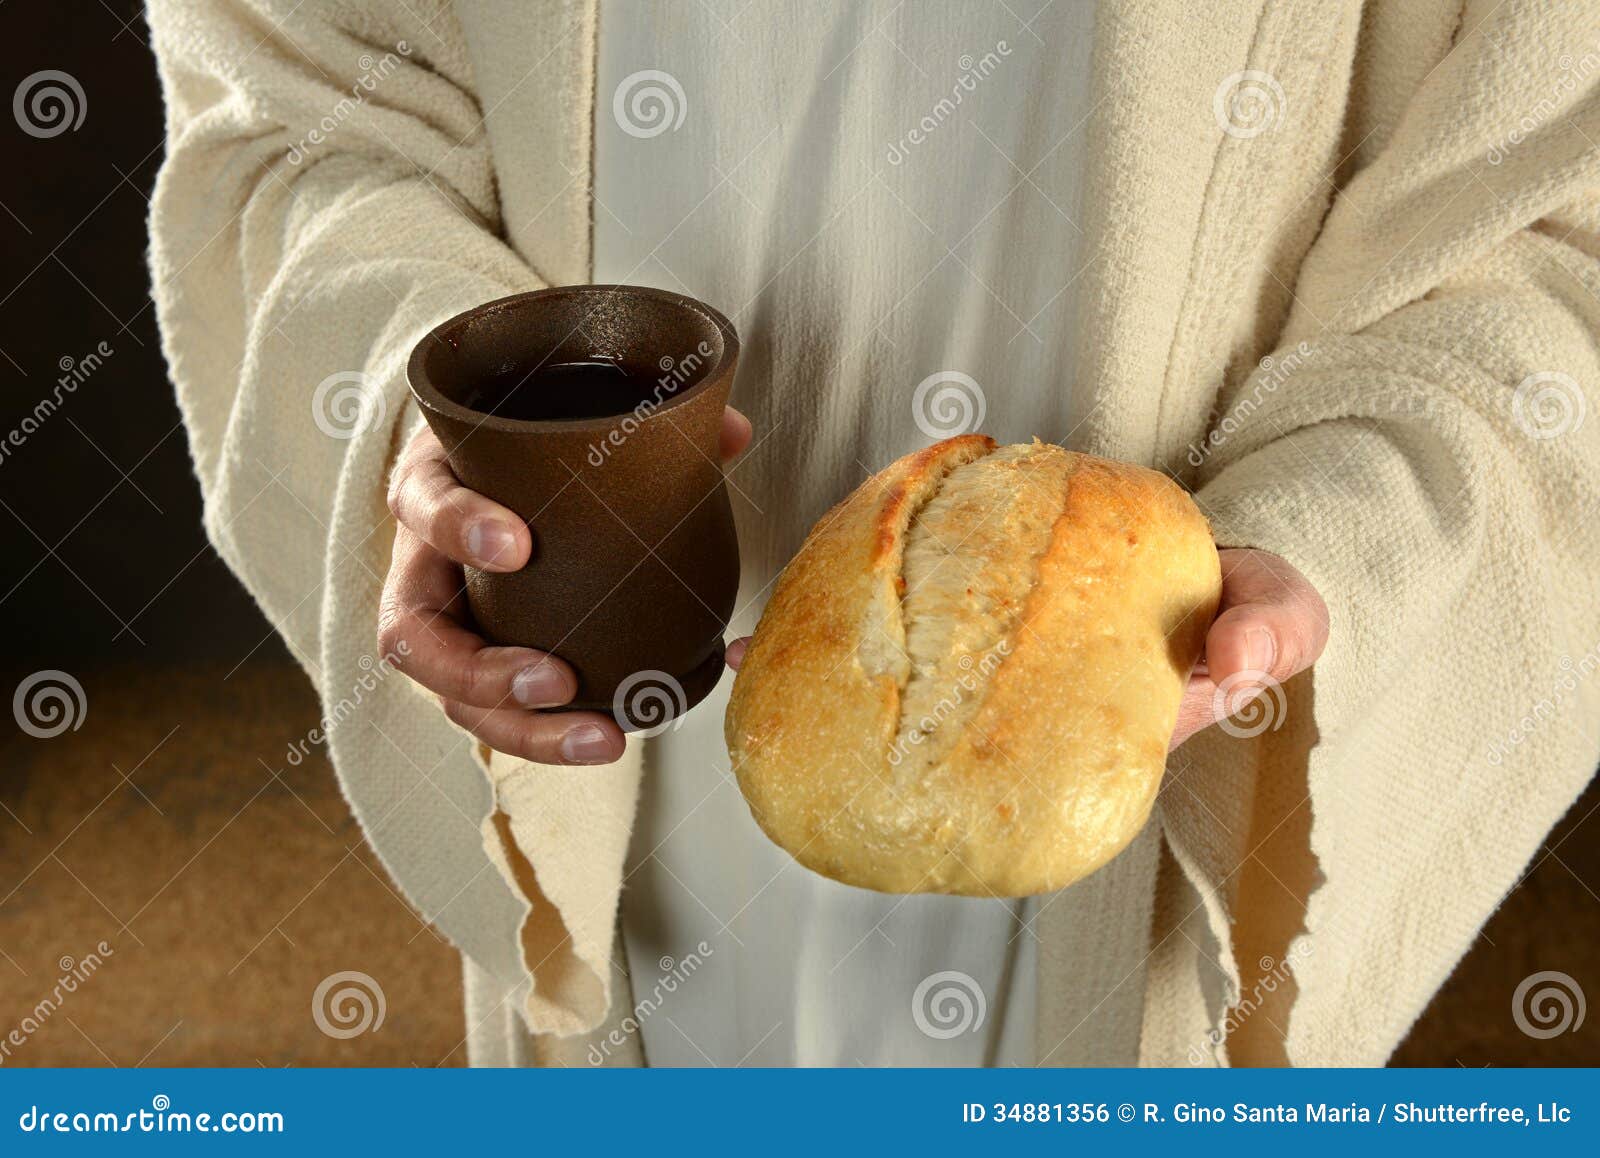 jesus holding bread and wine